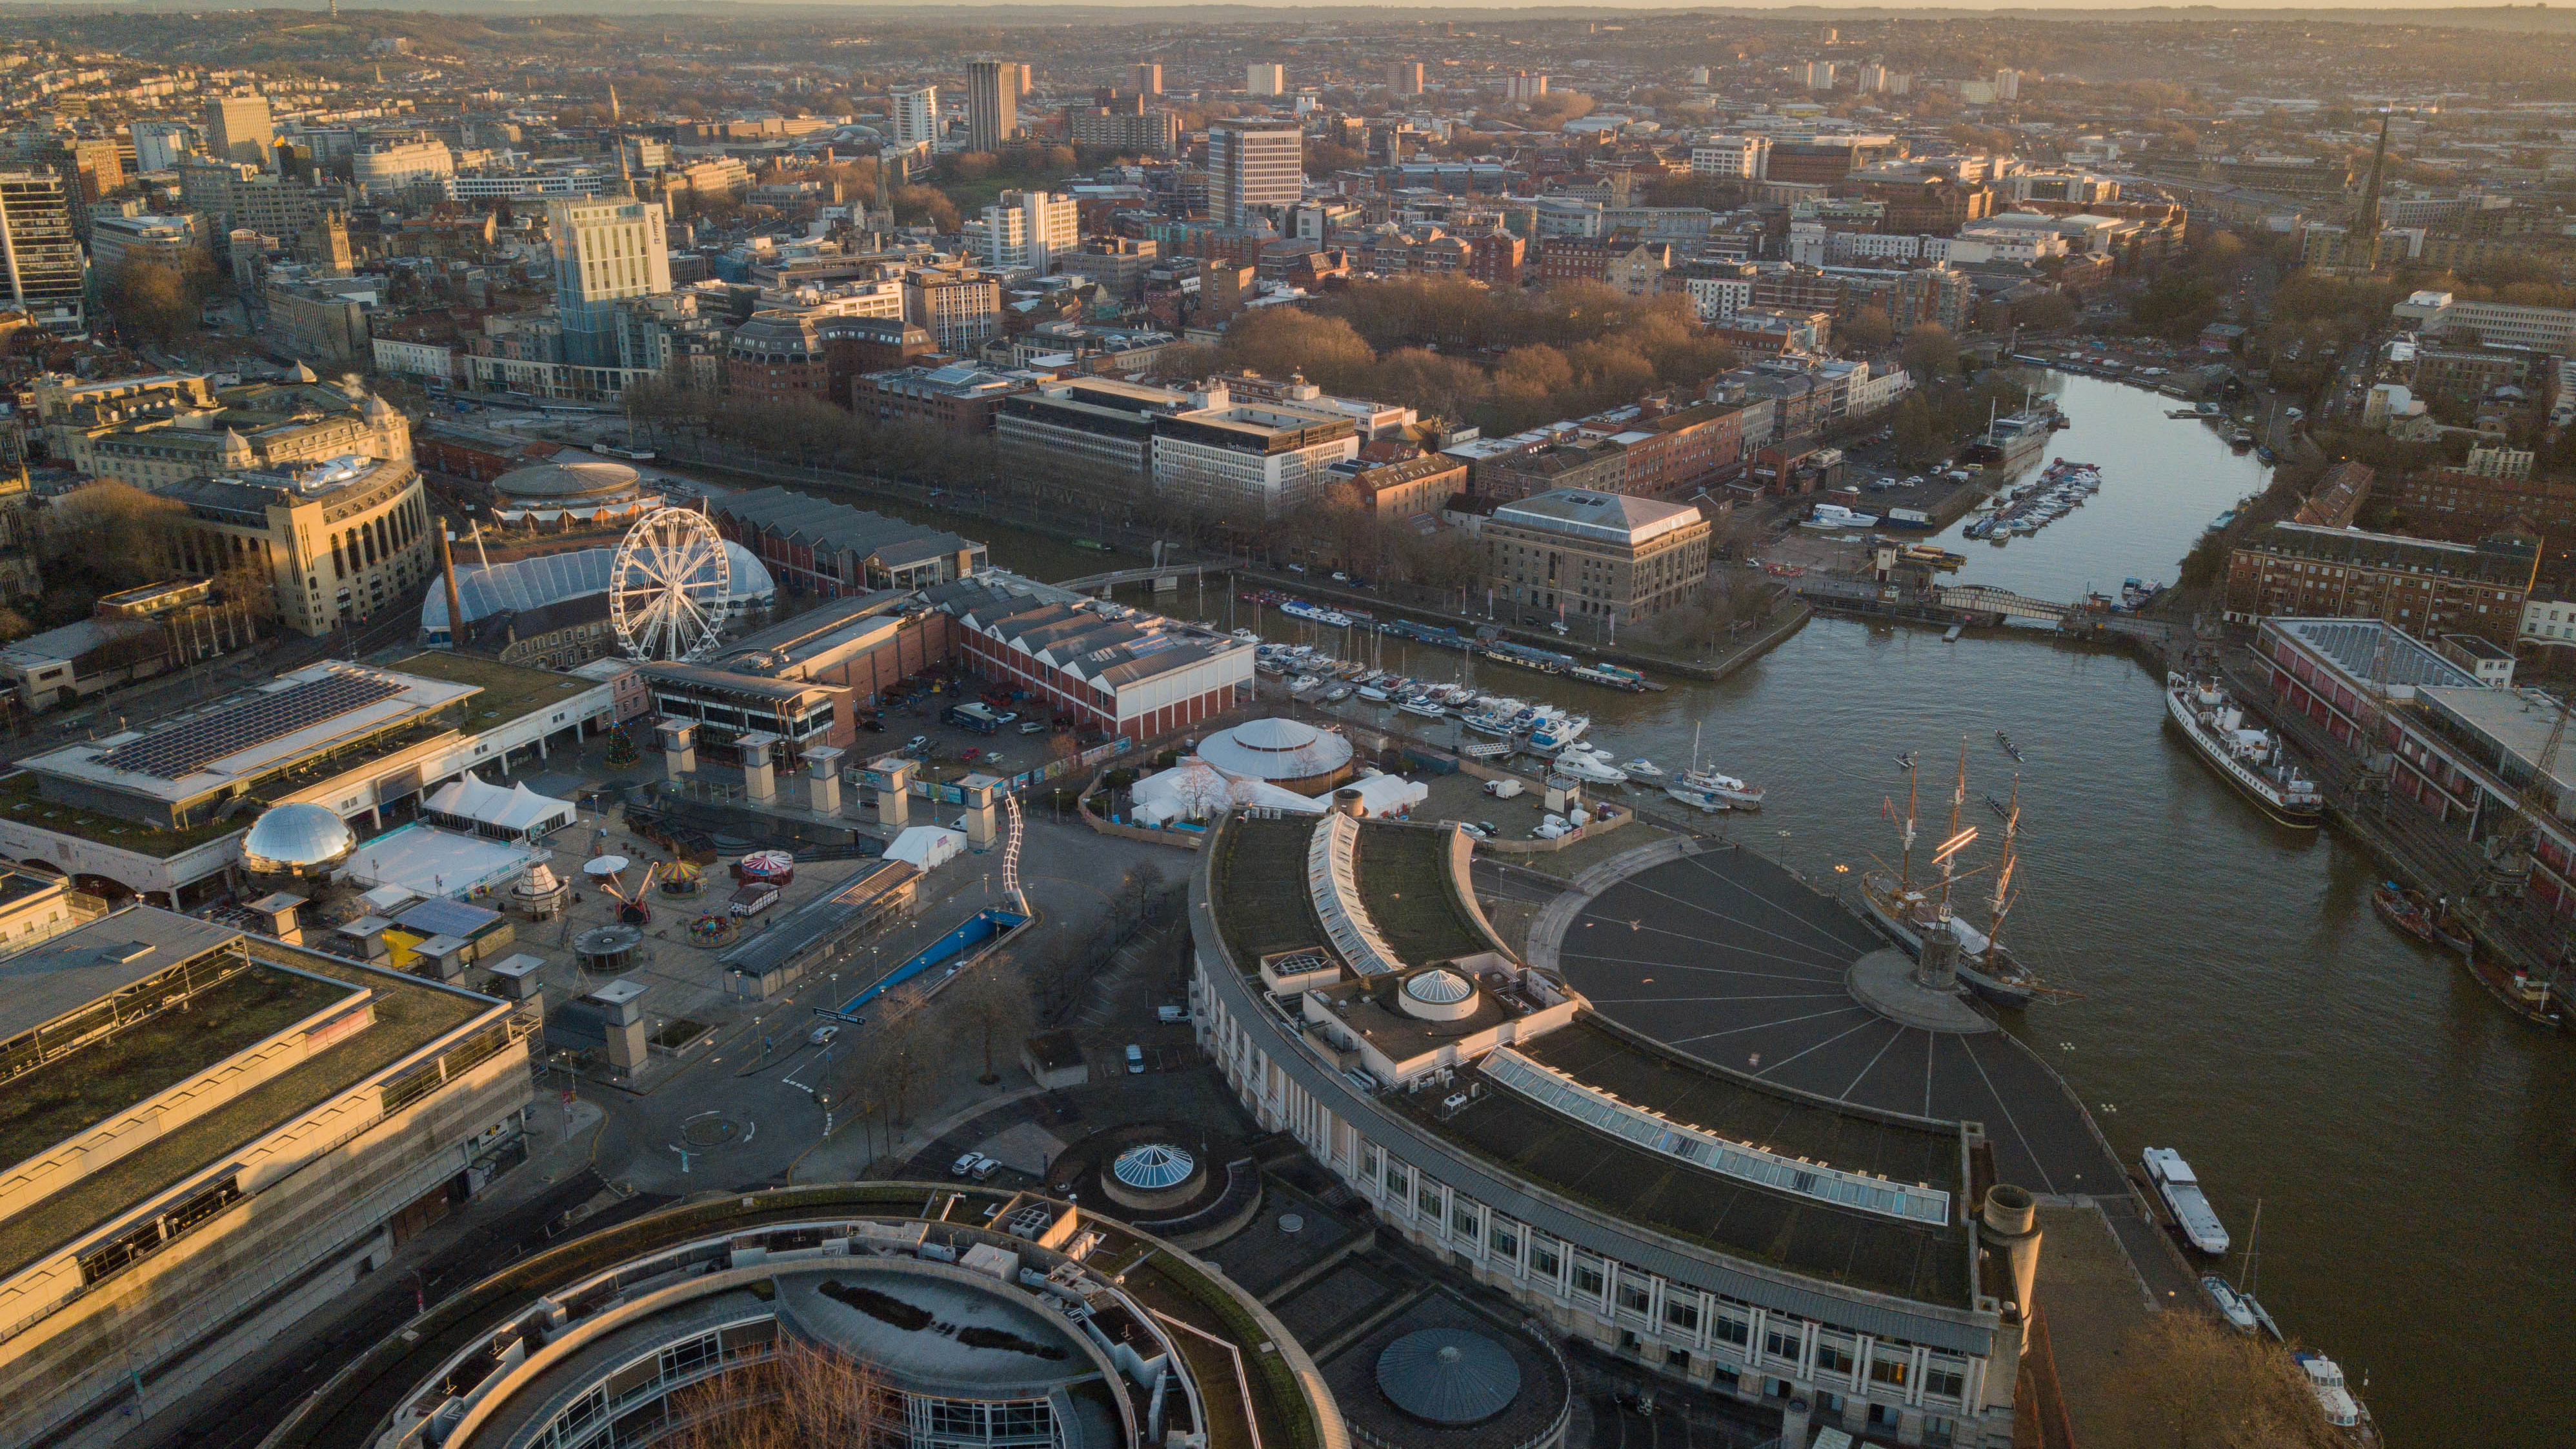 Aerial view of Bristol Docks area